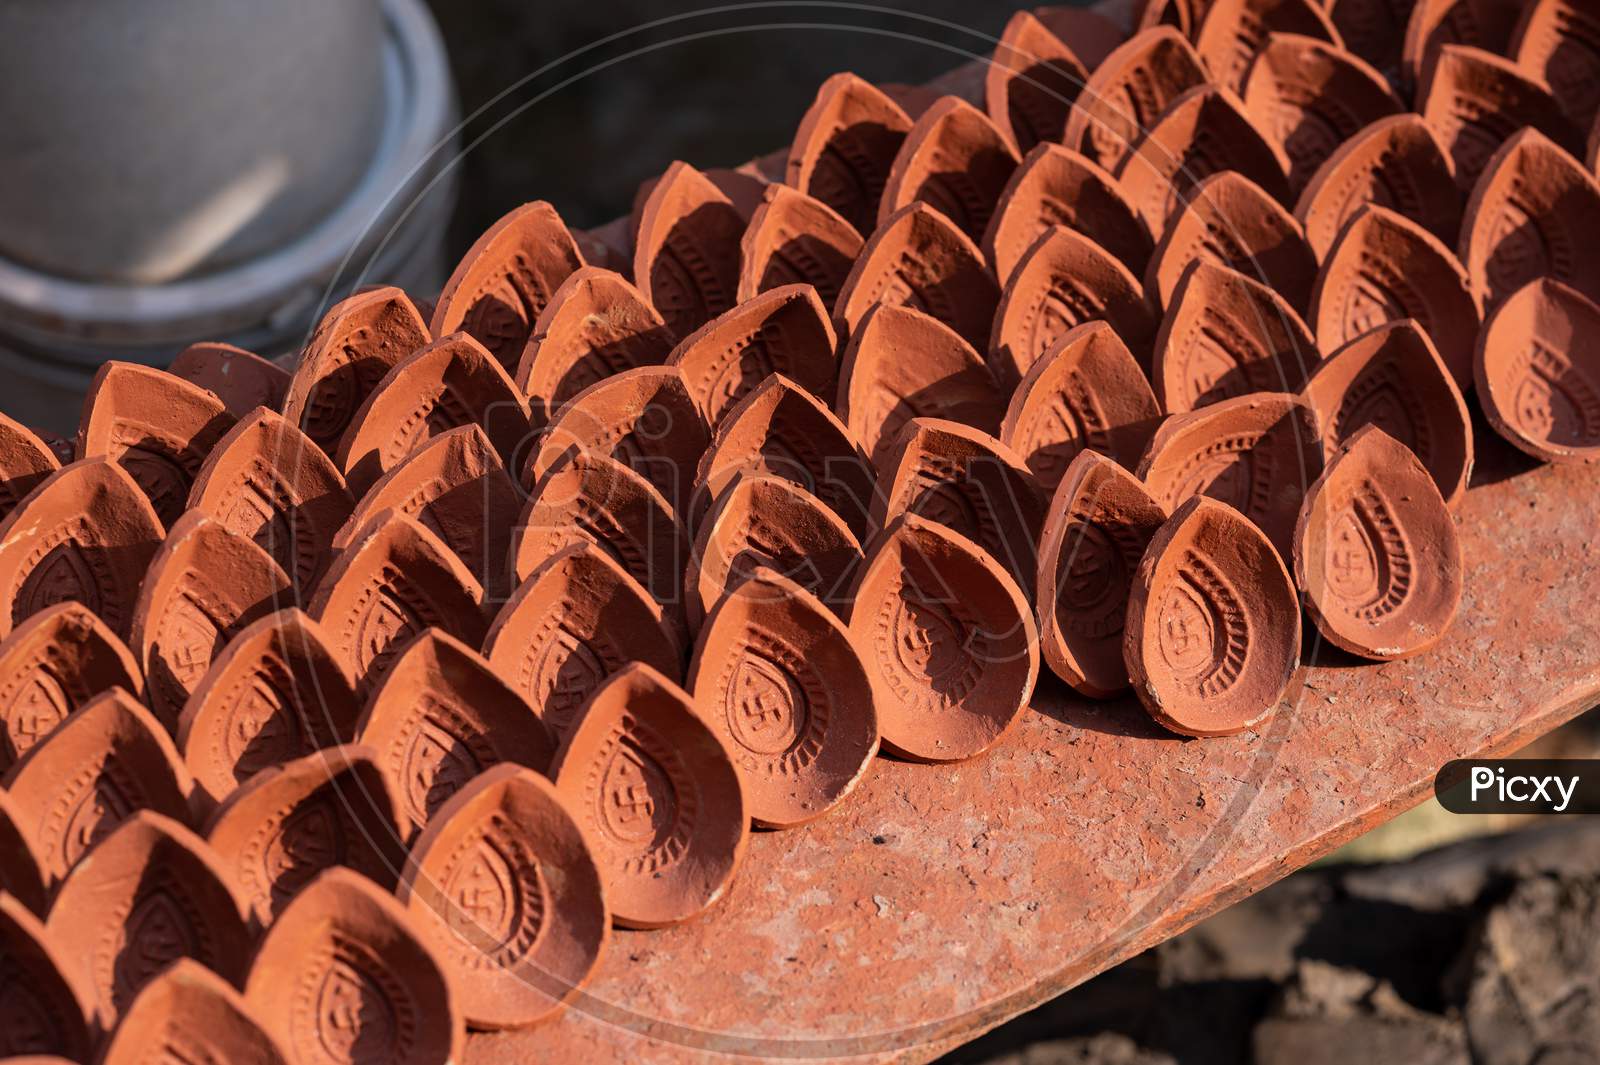 Traditional diya made of clay and mud placed in sunlight at Diya factory in Rural India.